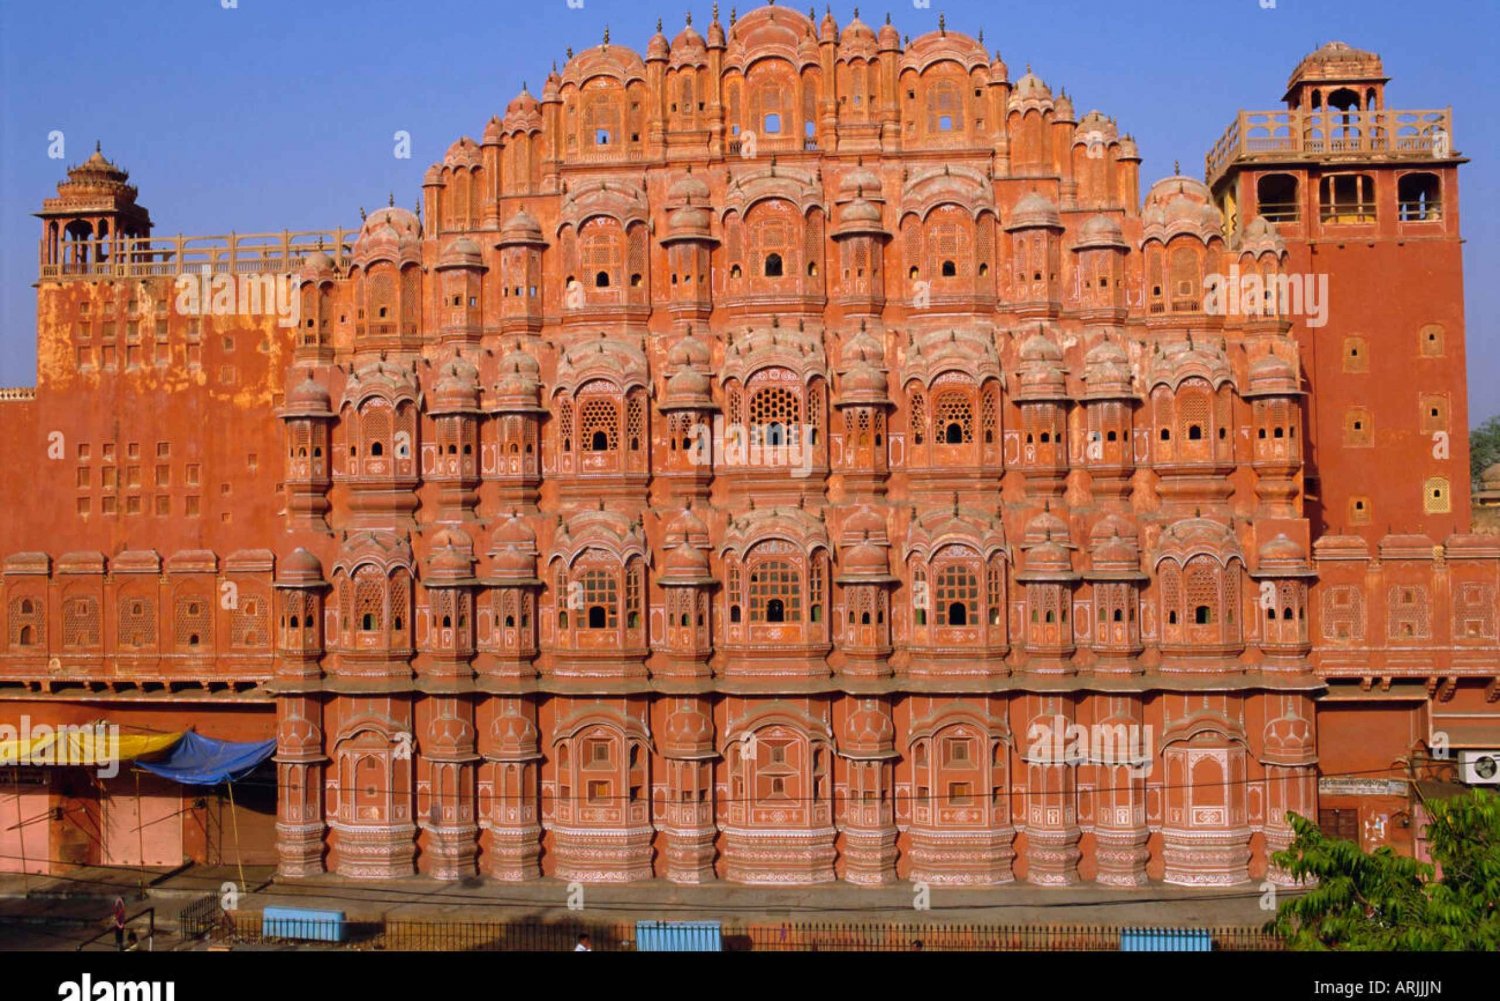 Delhi: 6-Day Taj Mahal & Palaces of Rajasthan Private Tour